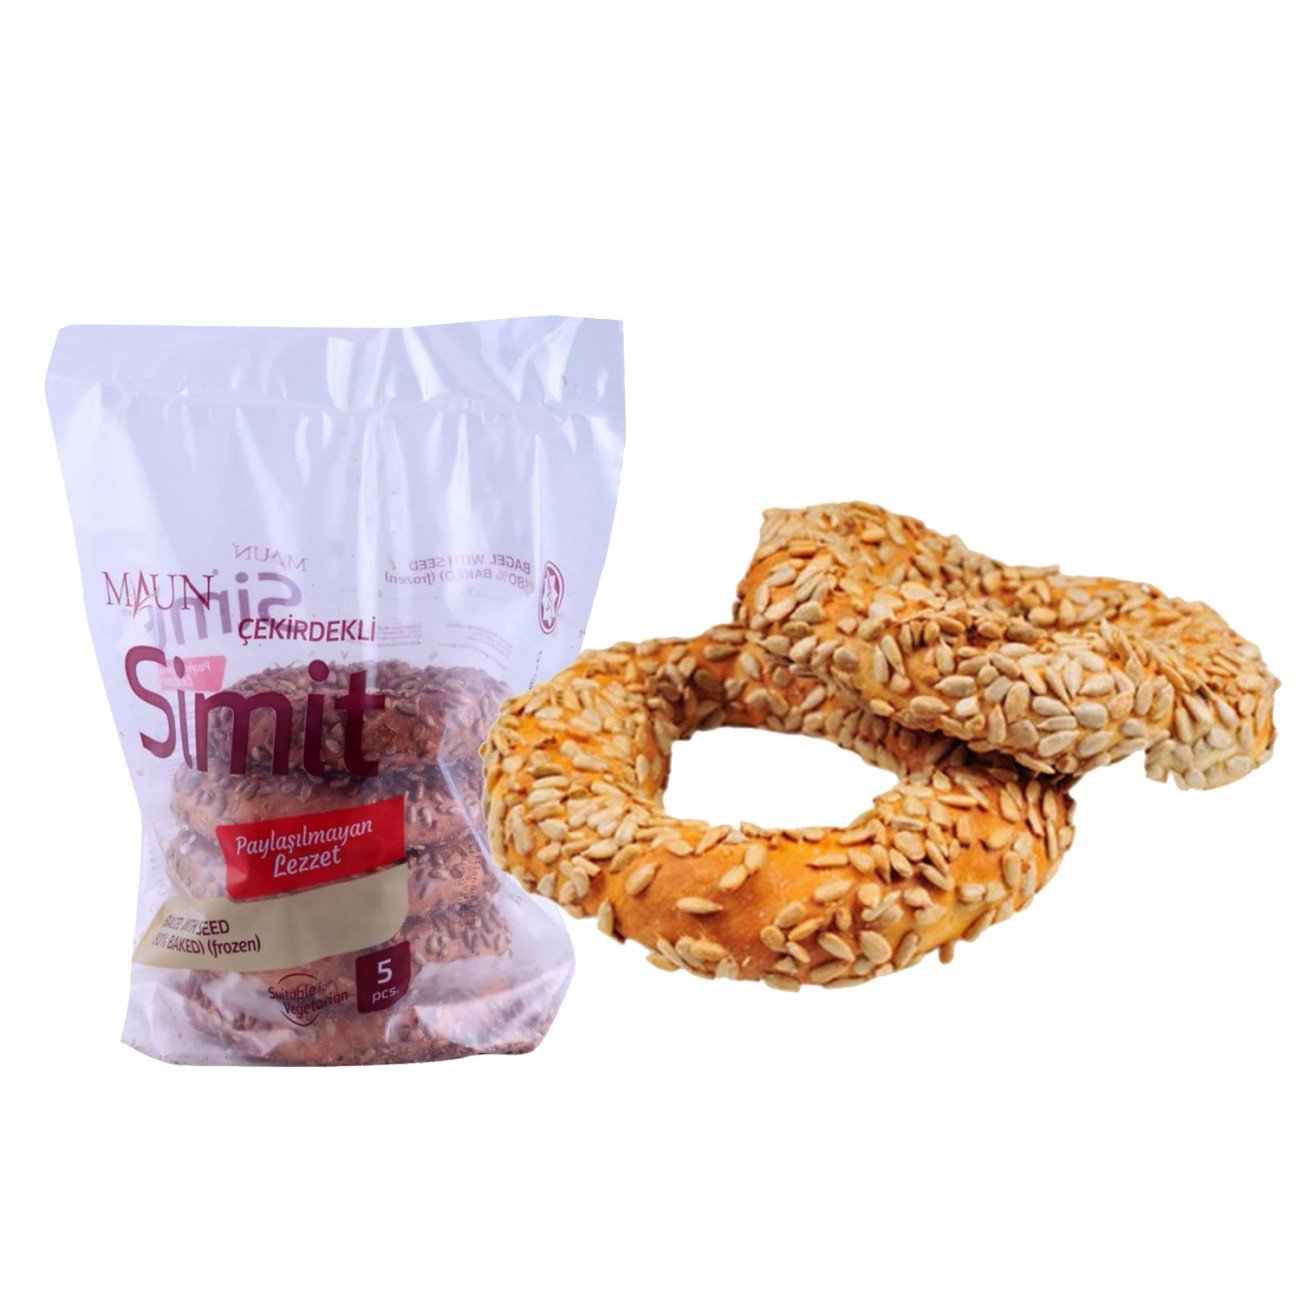 Maun Cekirdekli Simit Bagel With Seed (880G) - Aytac Foods